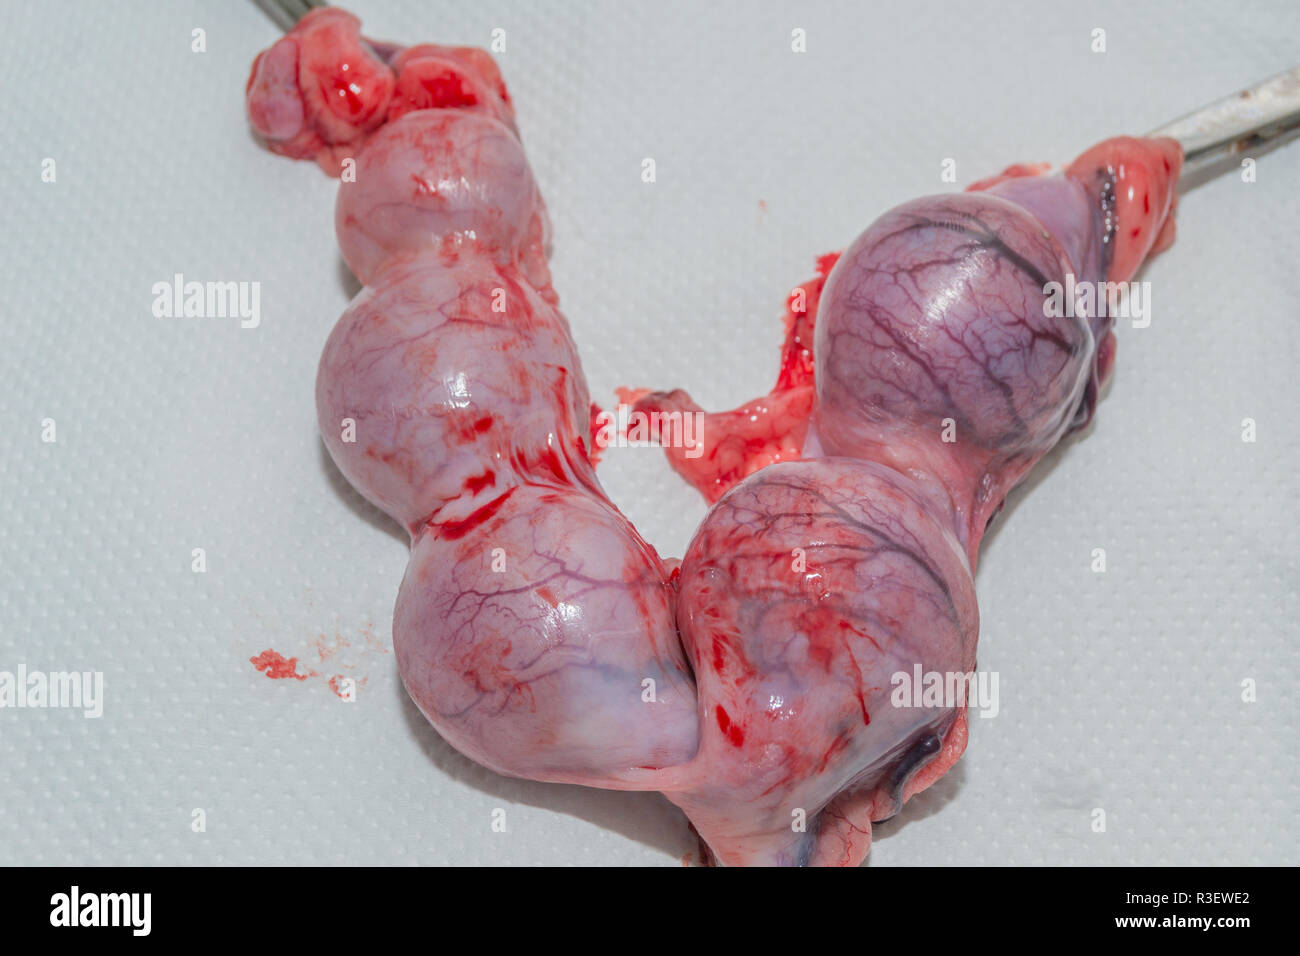 Female dog uterus and ovaries removed Stock Photo